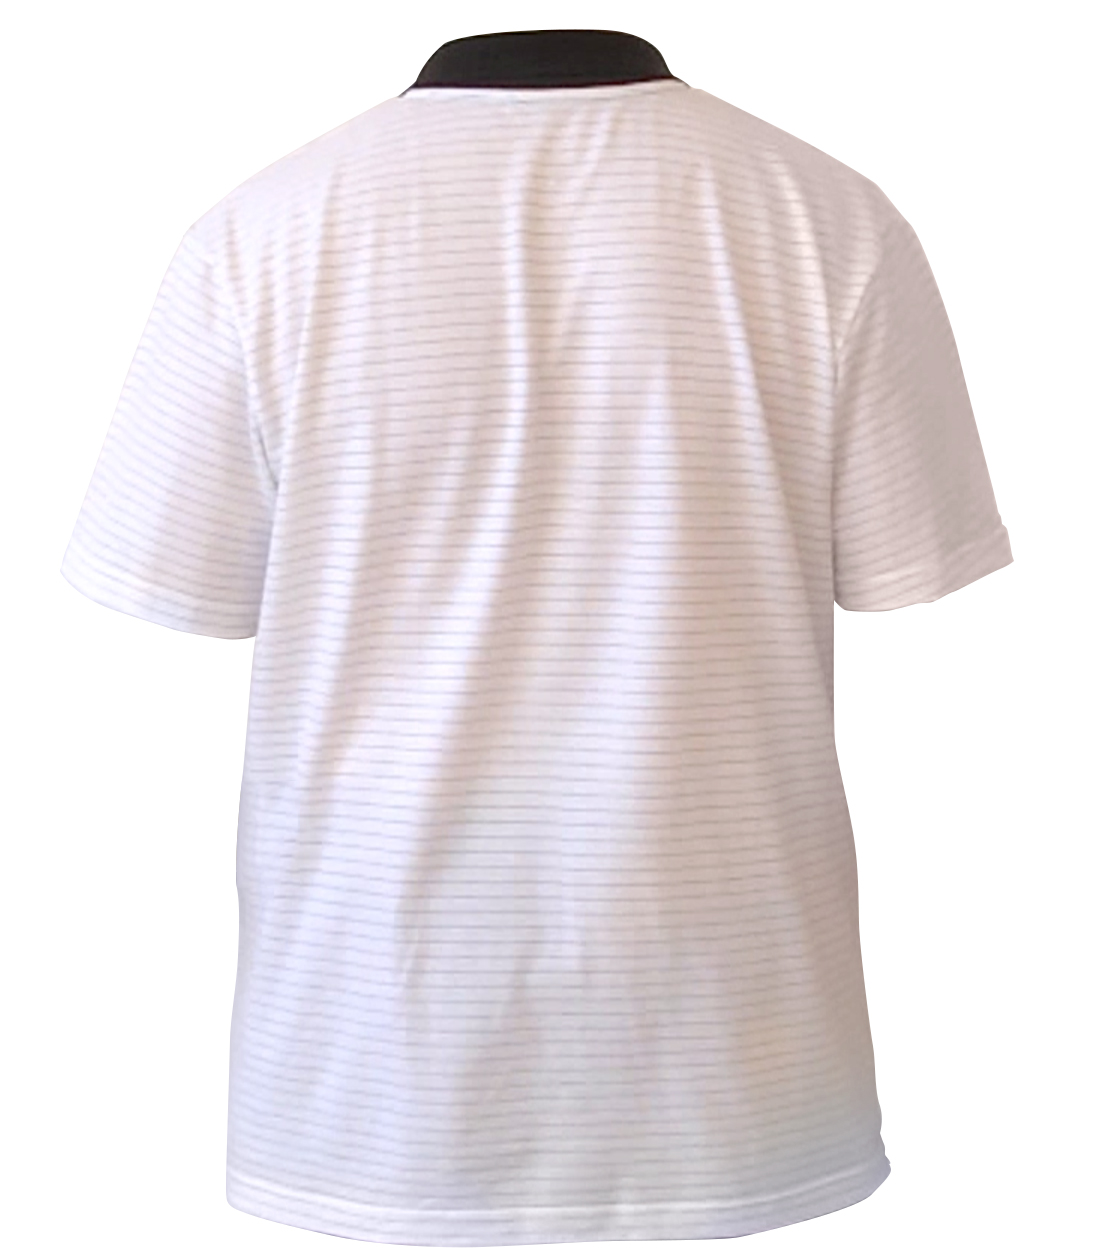 ESD Polo-Shirt Back APGZ Style White Unisex 4XL Antistatic Clothing ESD Garment - 473.APGZ-ATS16-W4X